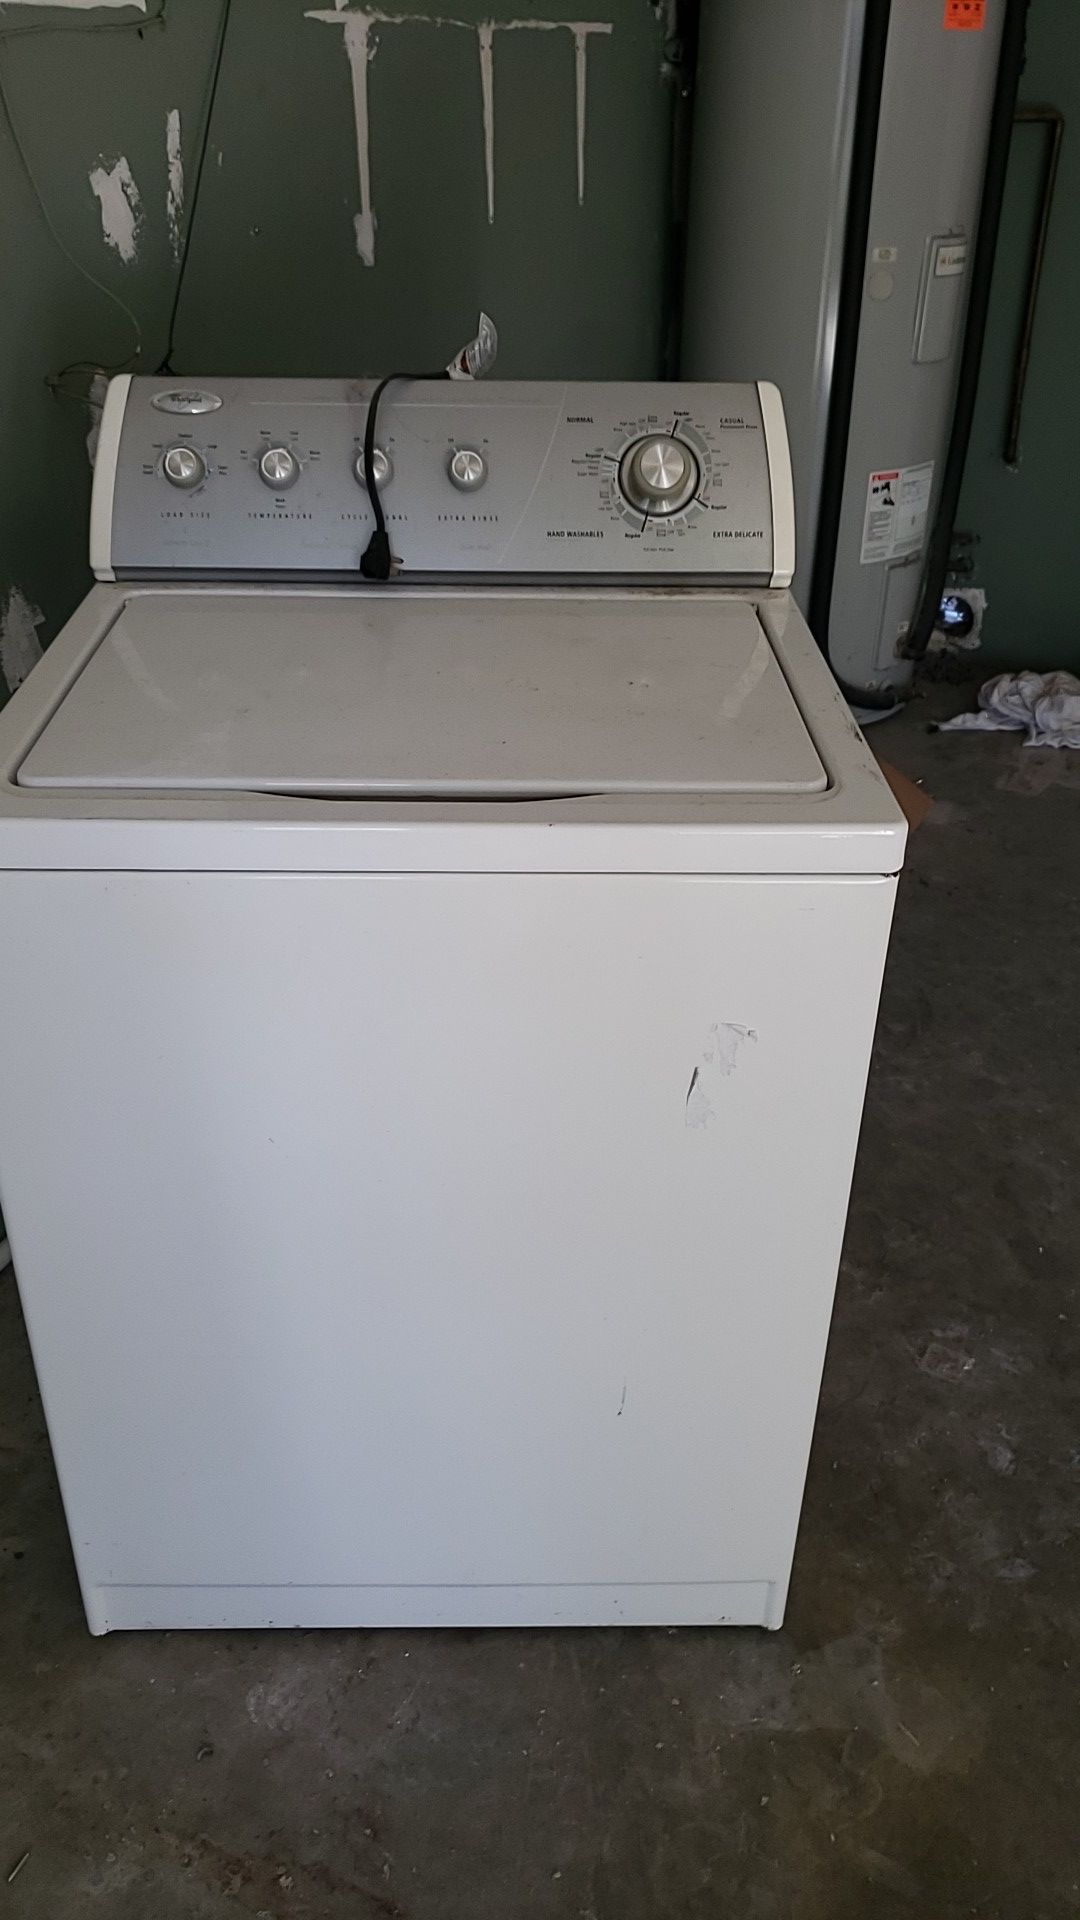 washing machine Whirlpool in good working order 100